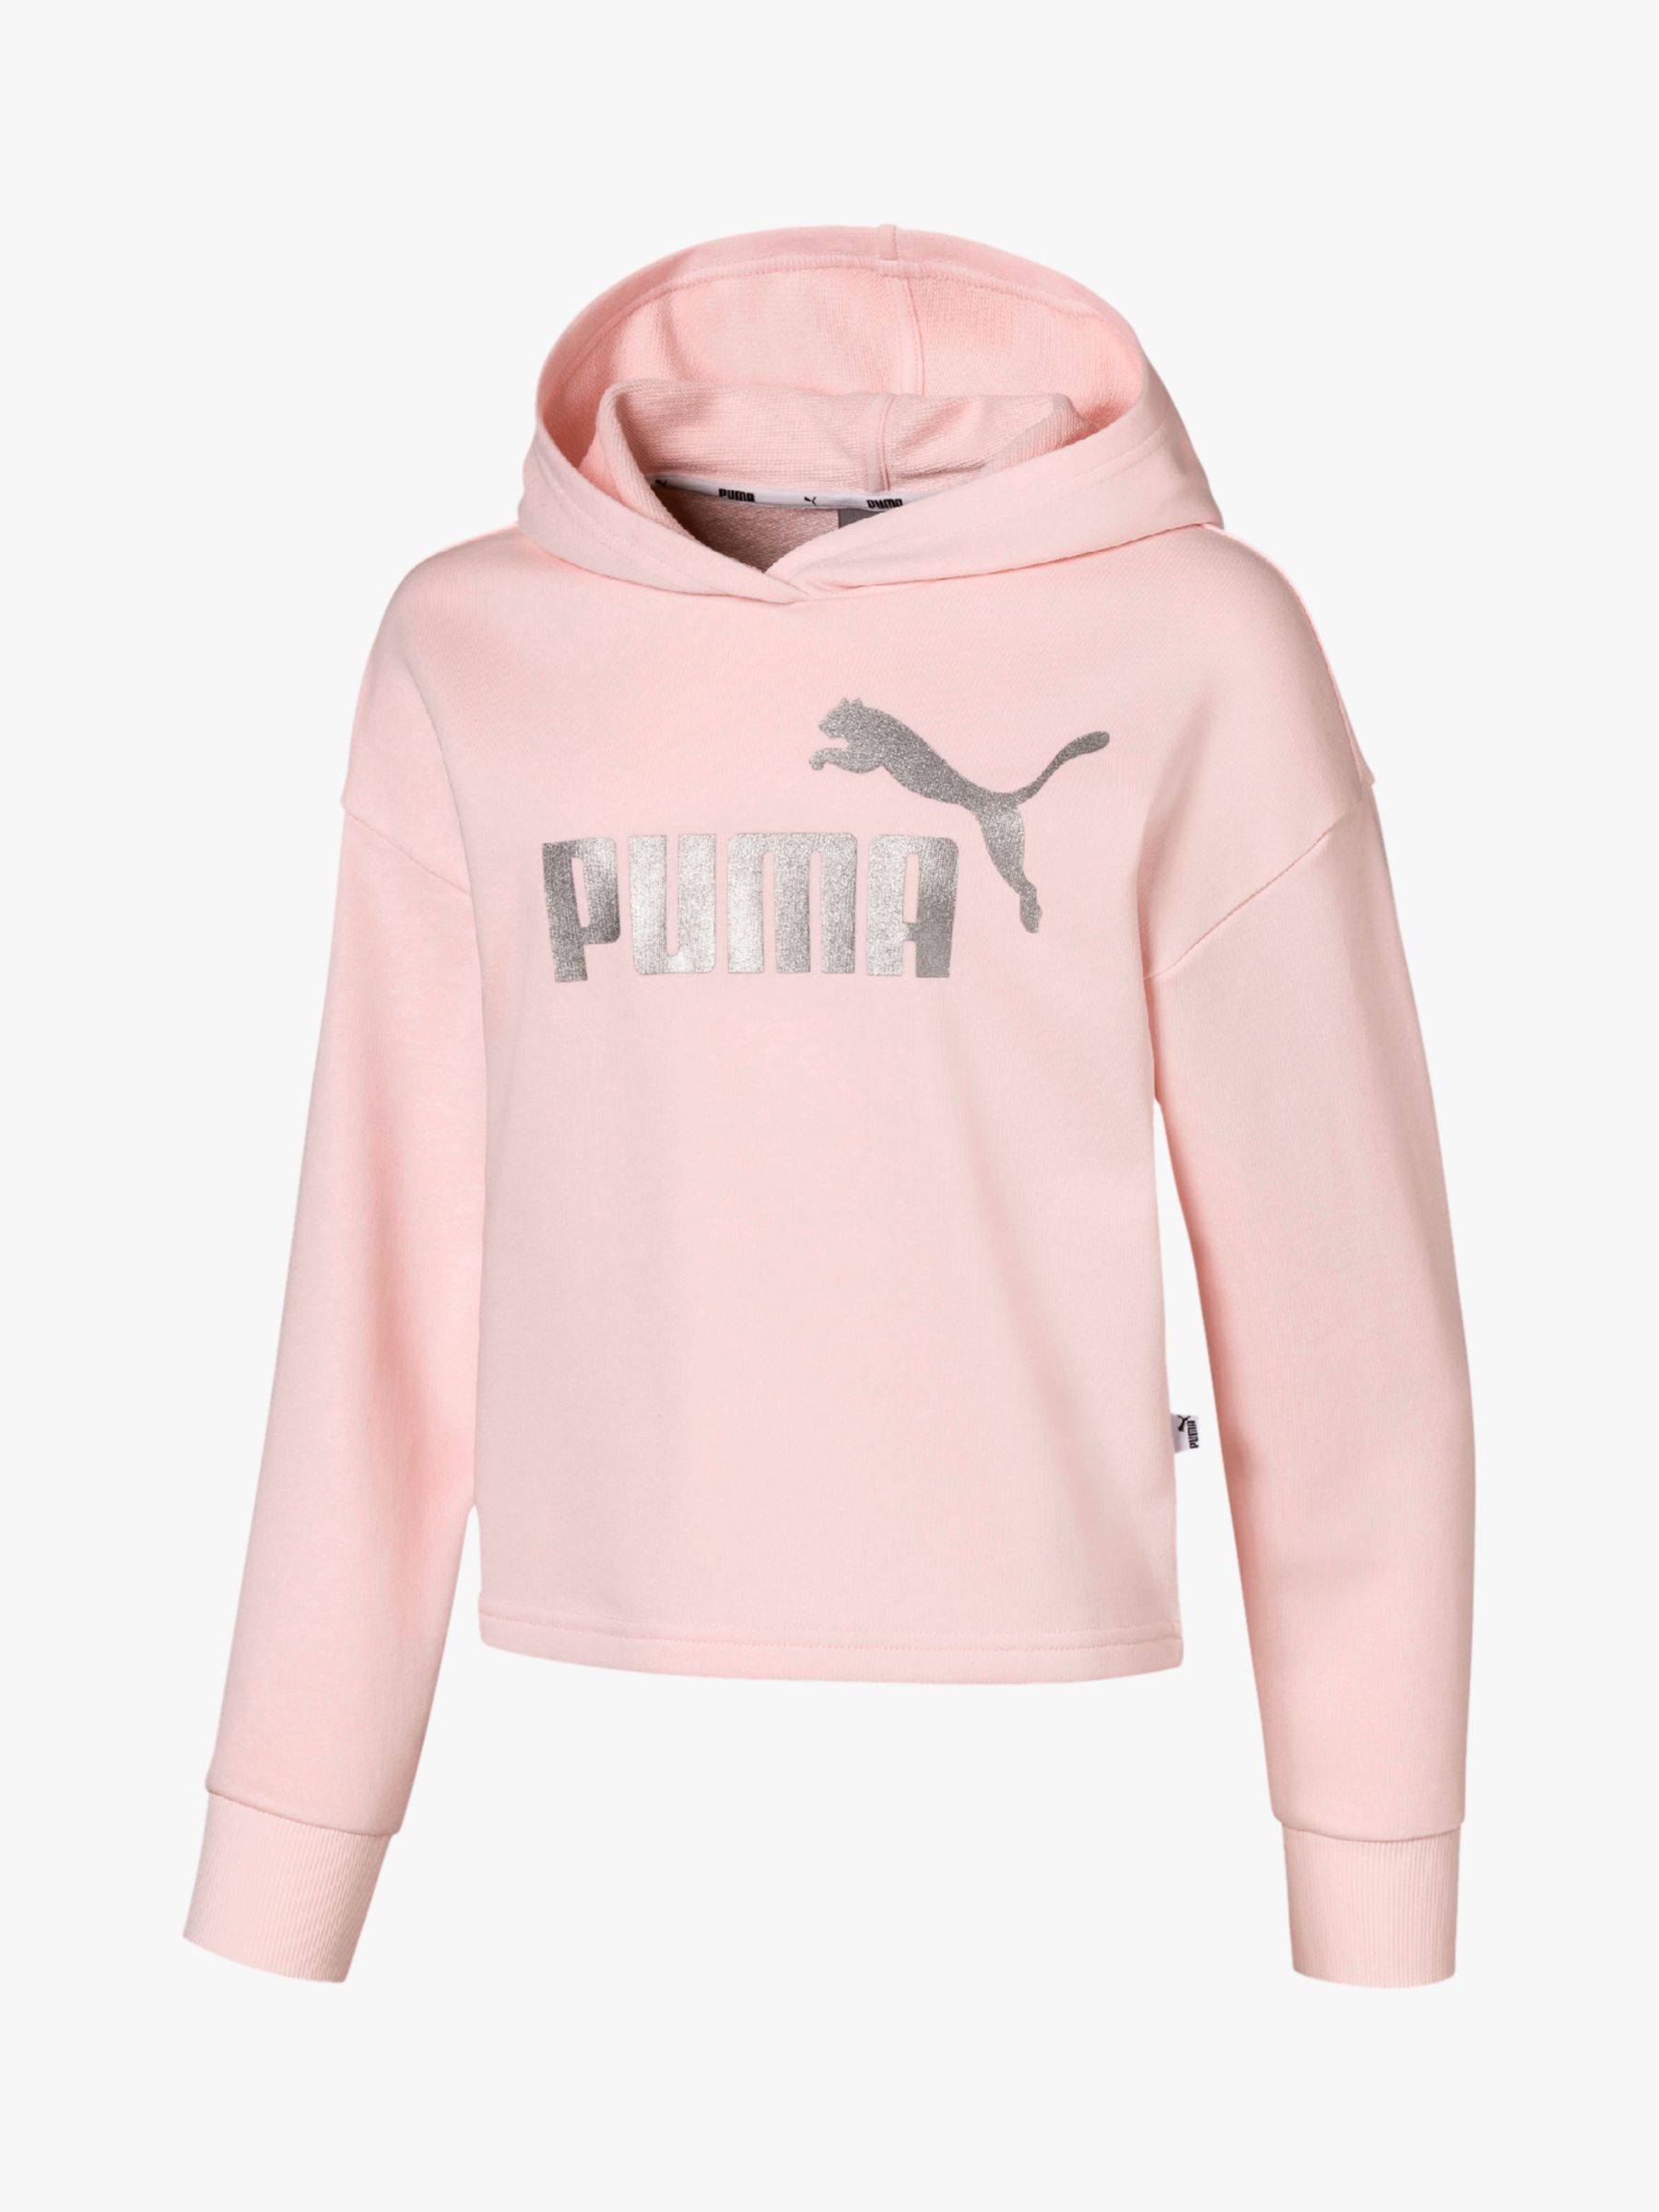 pink puma sweater